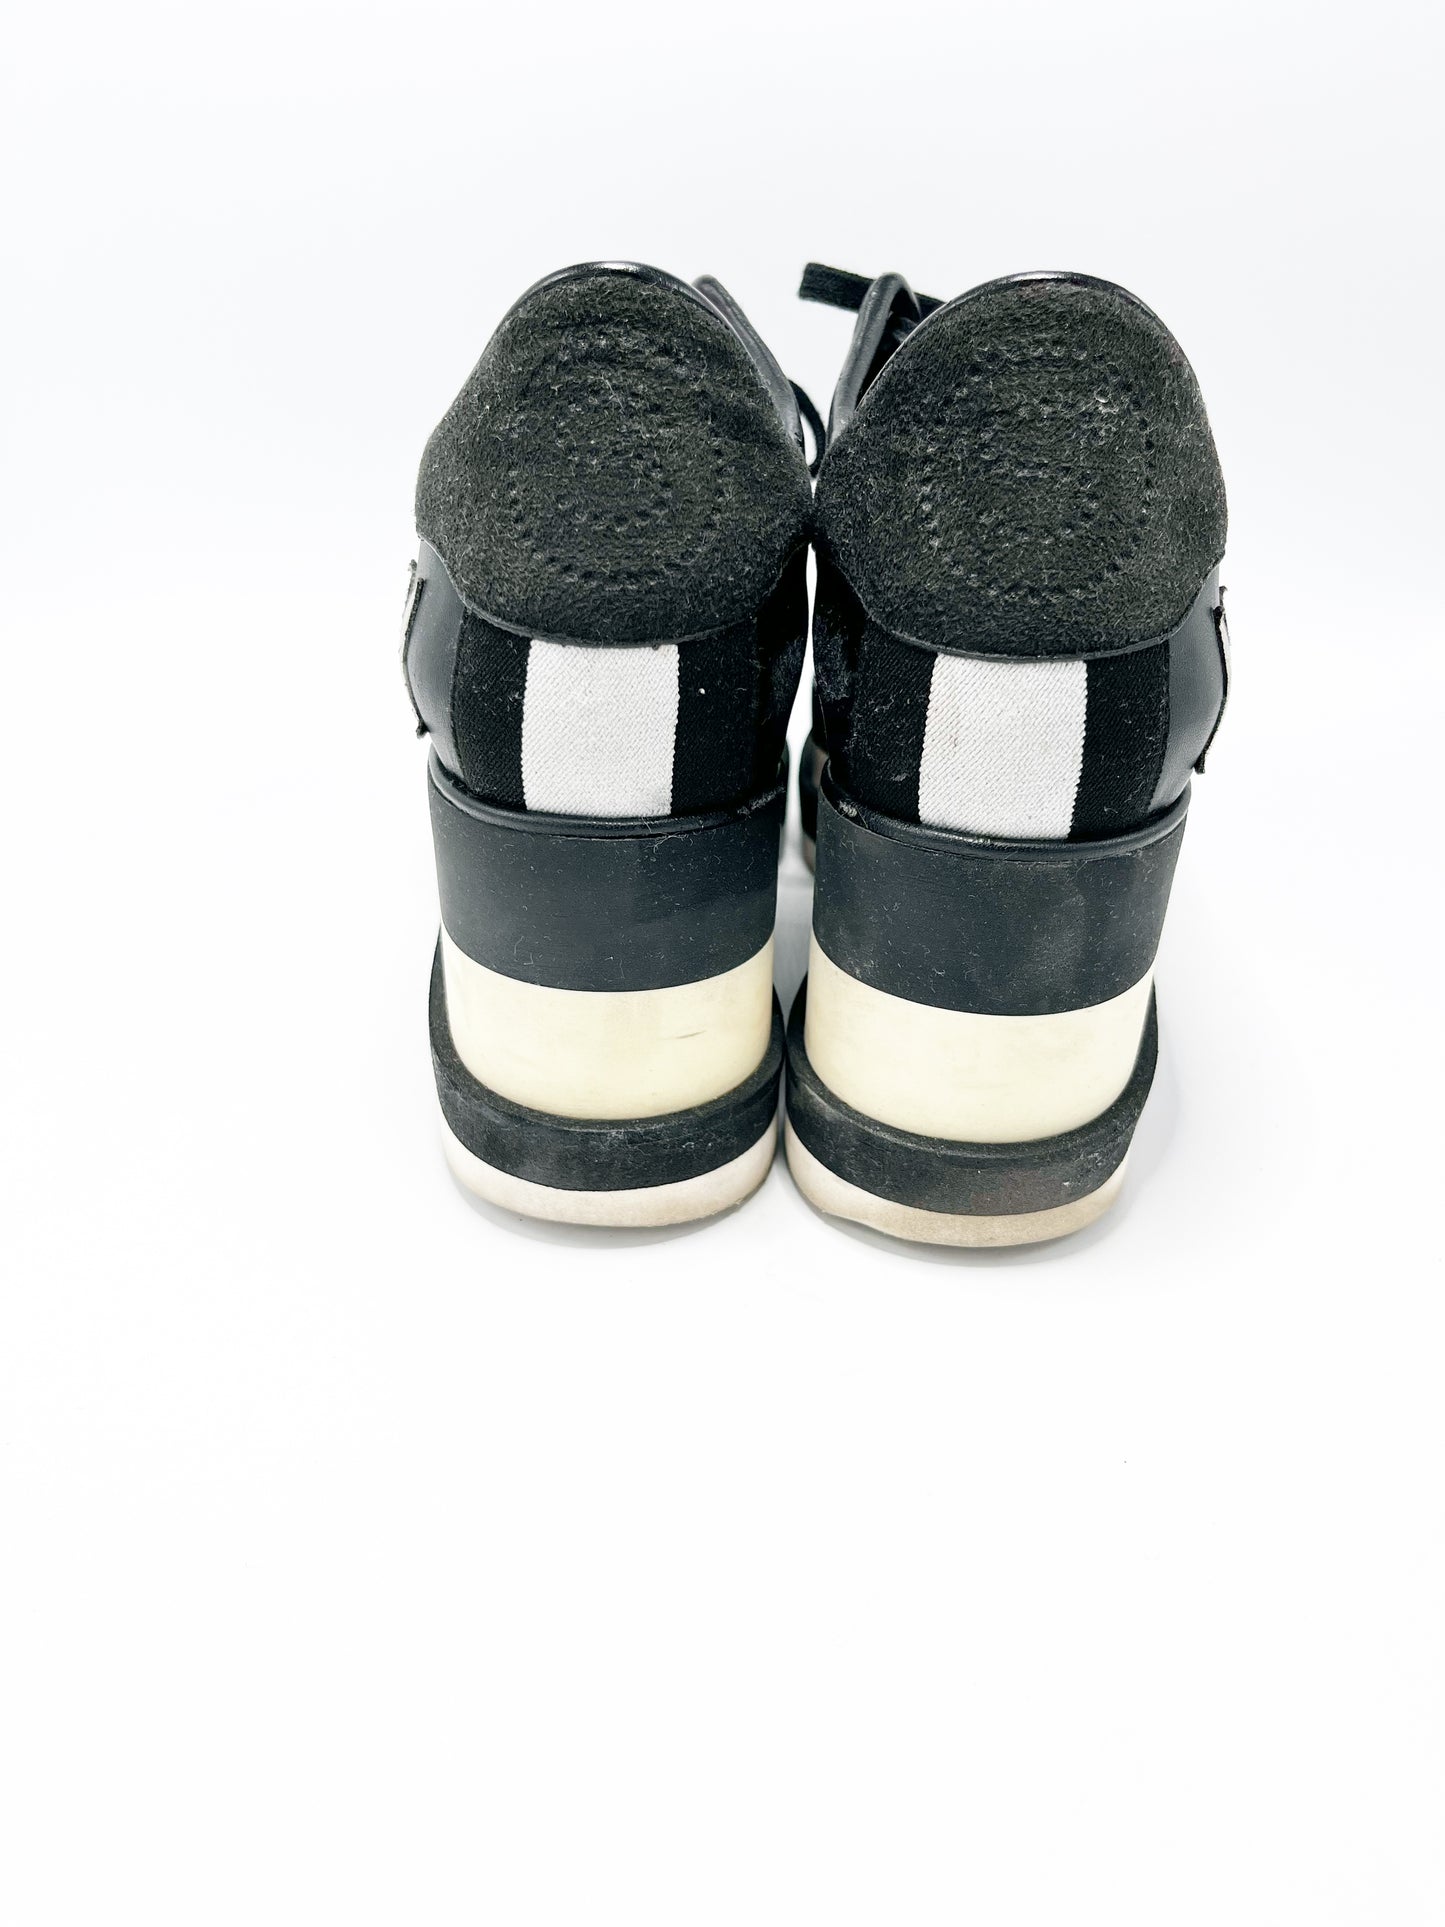 Champion Stella McCartney Elyse Platform Sneaker (39)